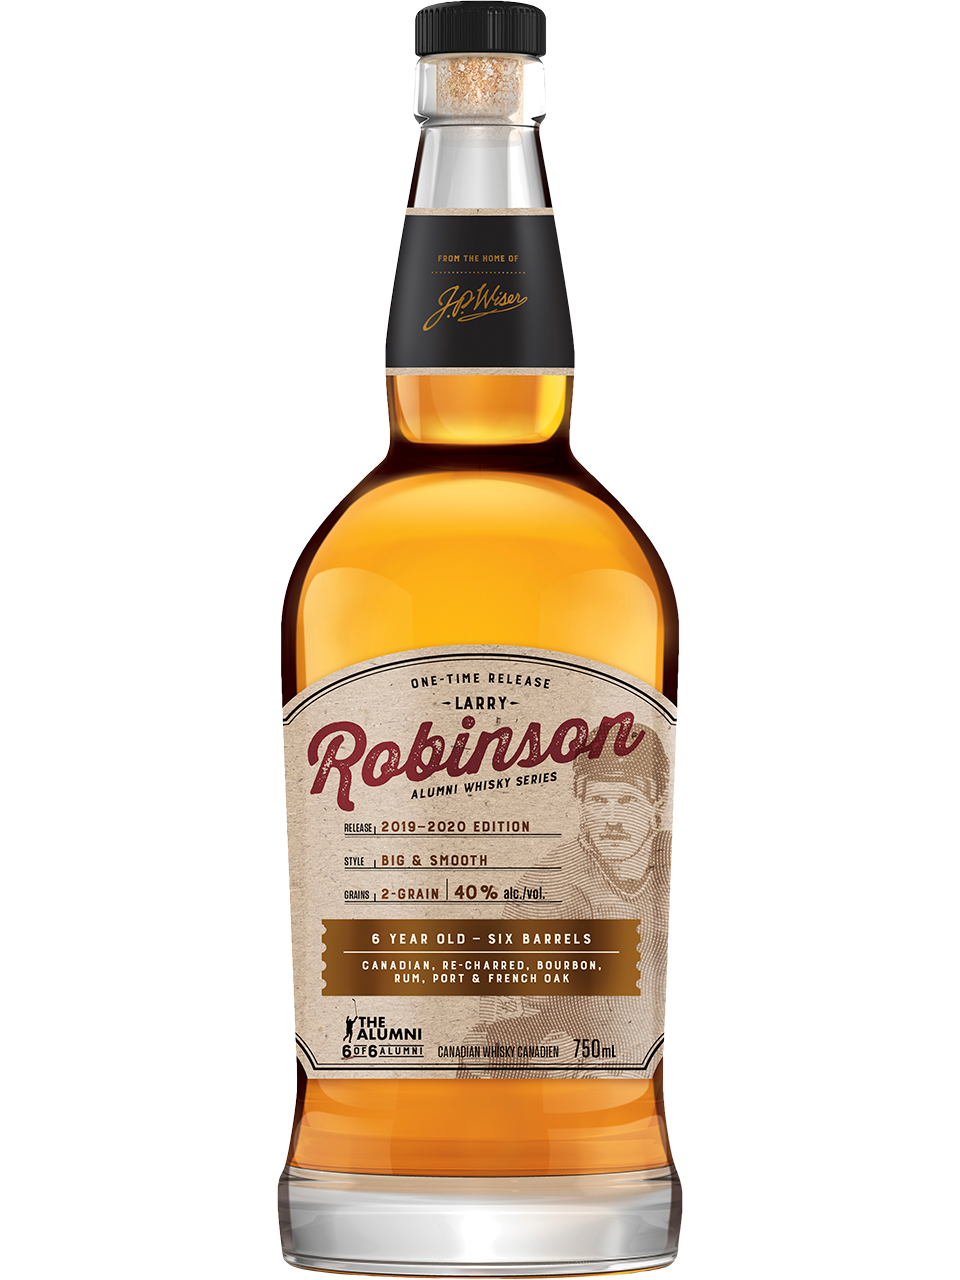 Larry Robinson Alumni Series Whisky